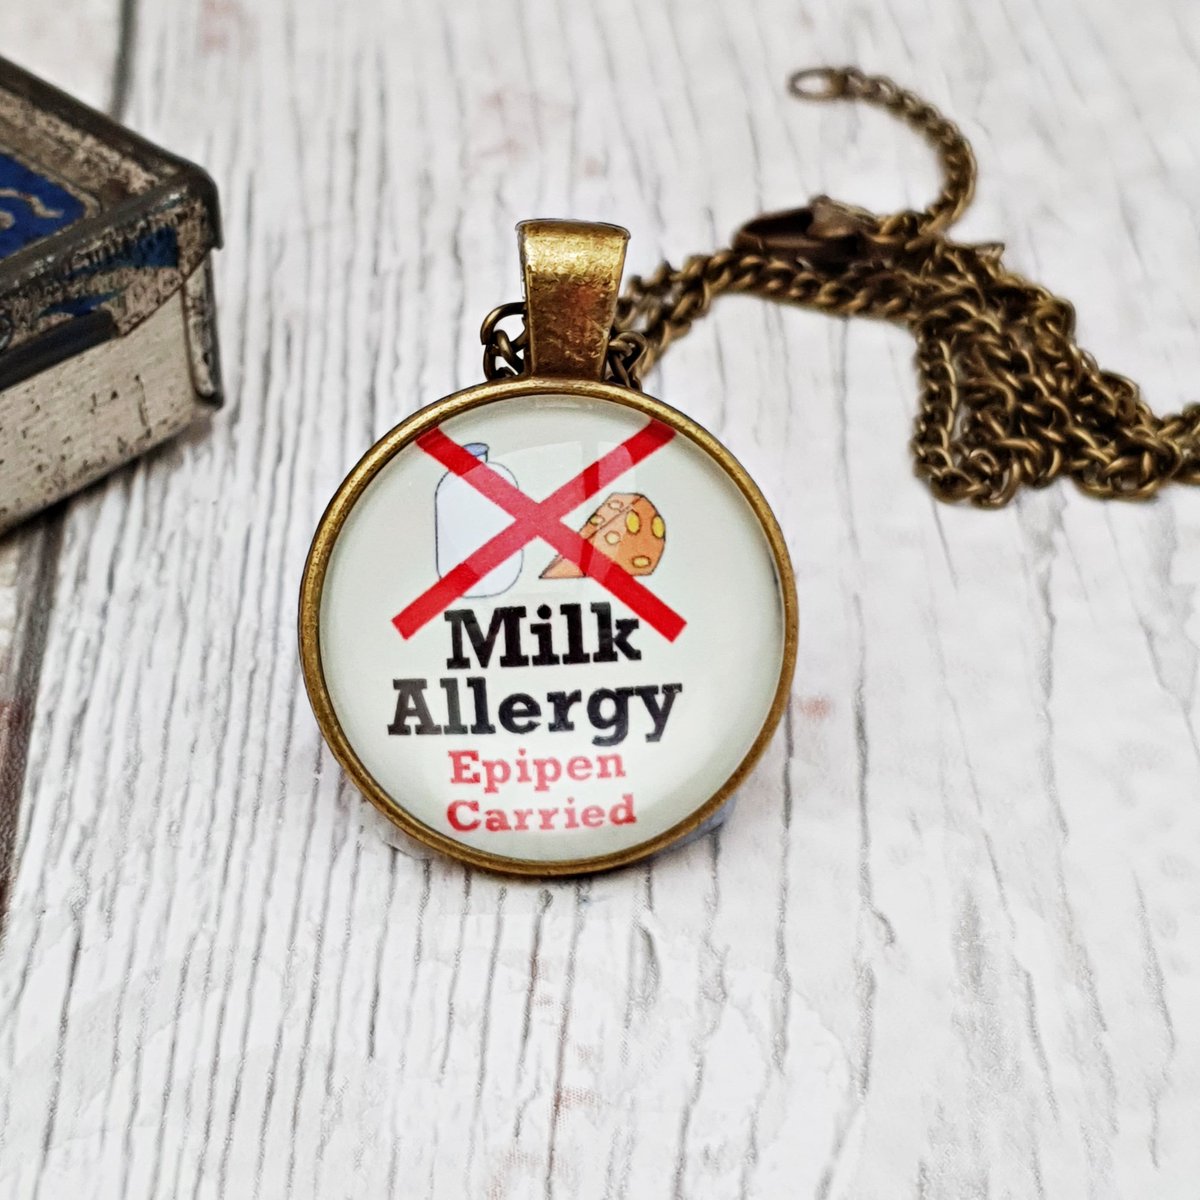 Milk allergy jewelry, dairy allergy necklace, medical alert necklace, epipen alert, anaphylaxis, allergic to milk, medical id, allergic tuppu.net/704f8c2c #Etsy #Handmade #SMILEtt23 #Shopsmall #AllergyCharm